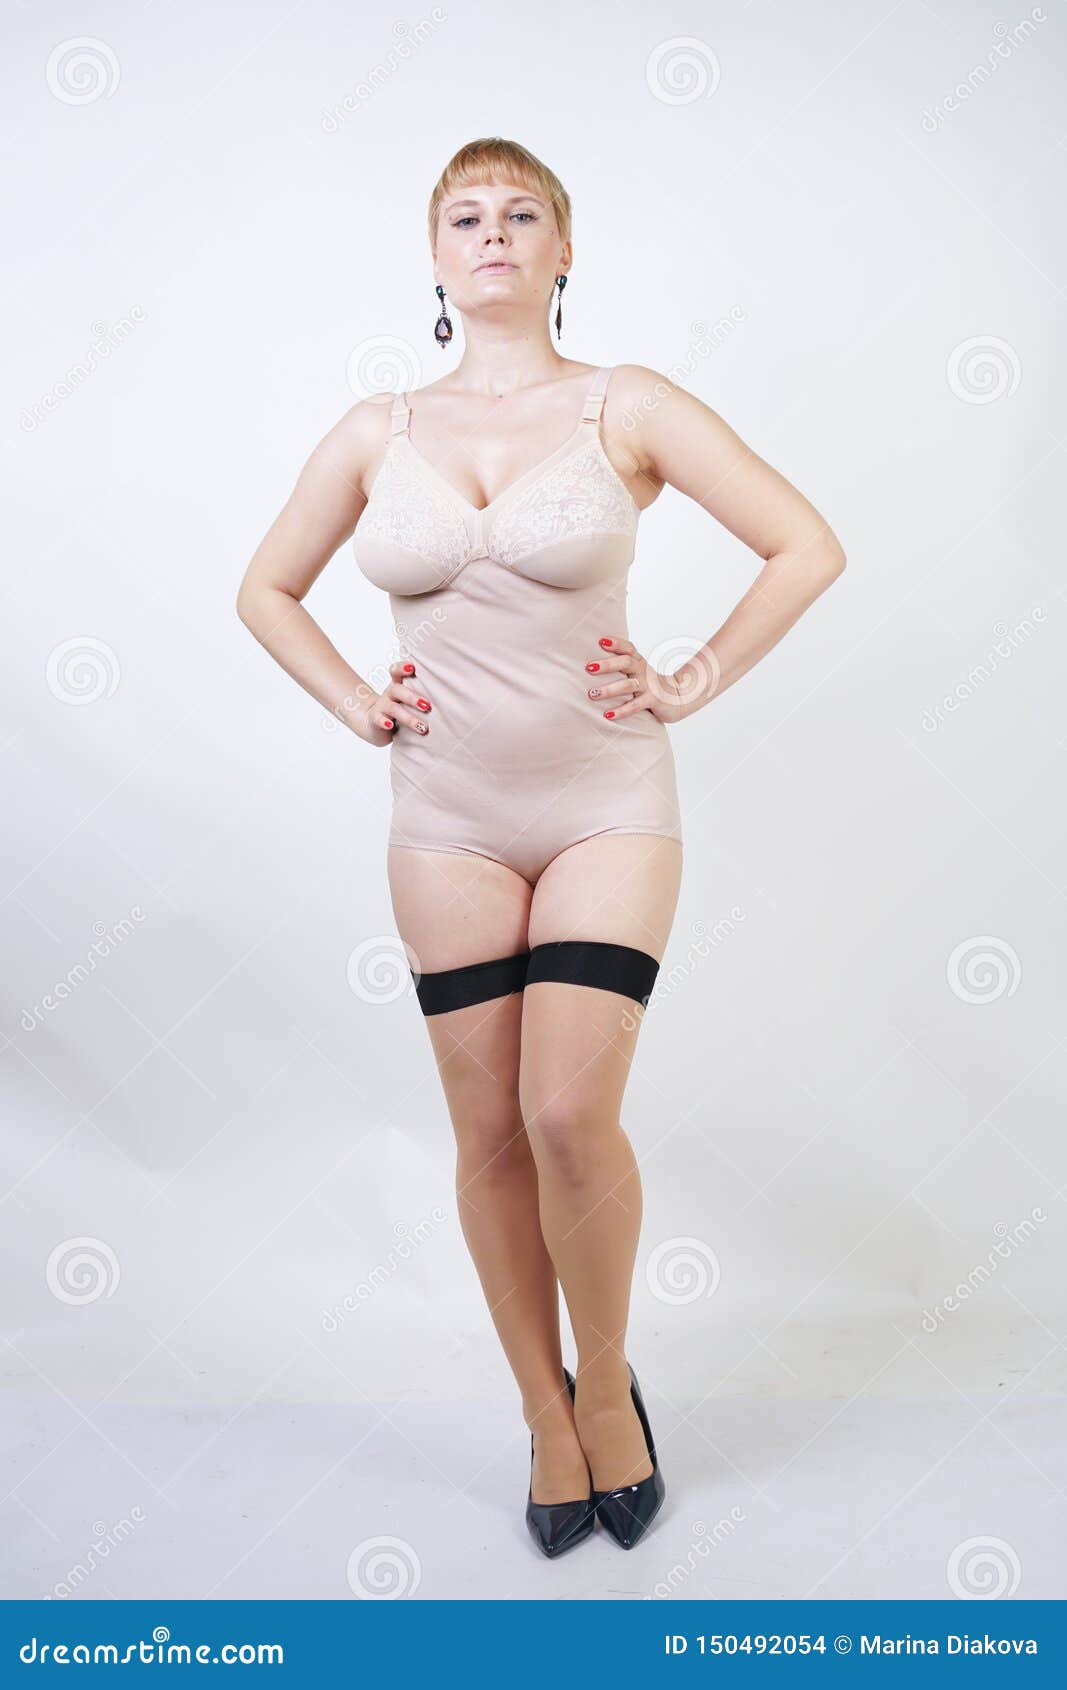 Pretty Blonde Short Hair Retro Woman with Curvy Body Posing in